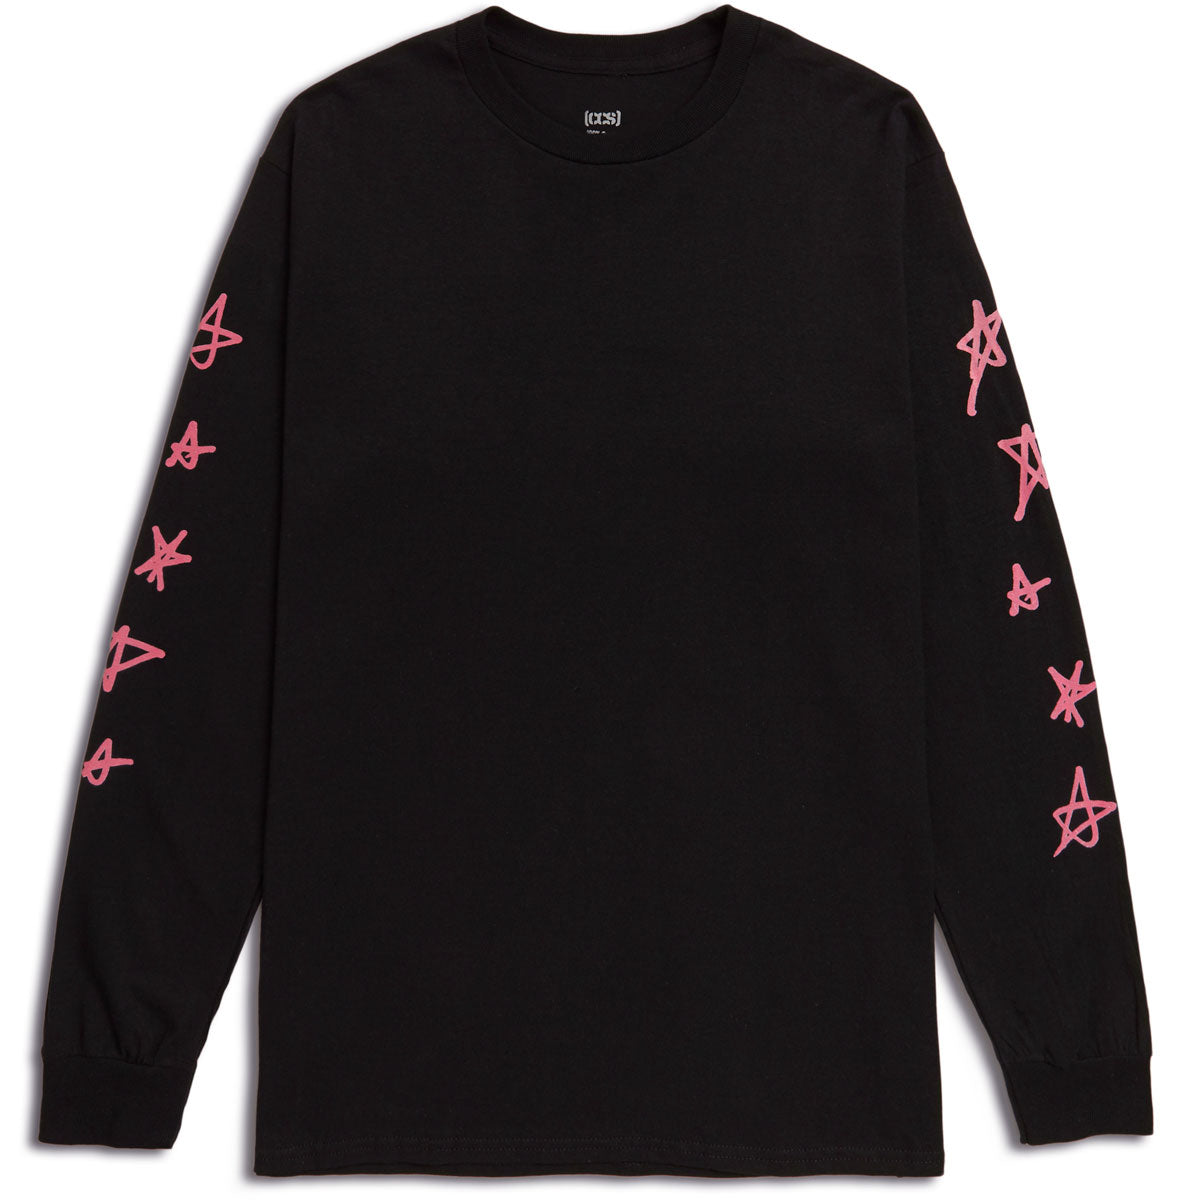 CCS Stars Long Sleeve T-Shirt - Black/Pink - SM image 1